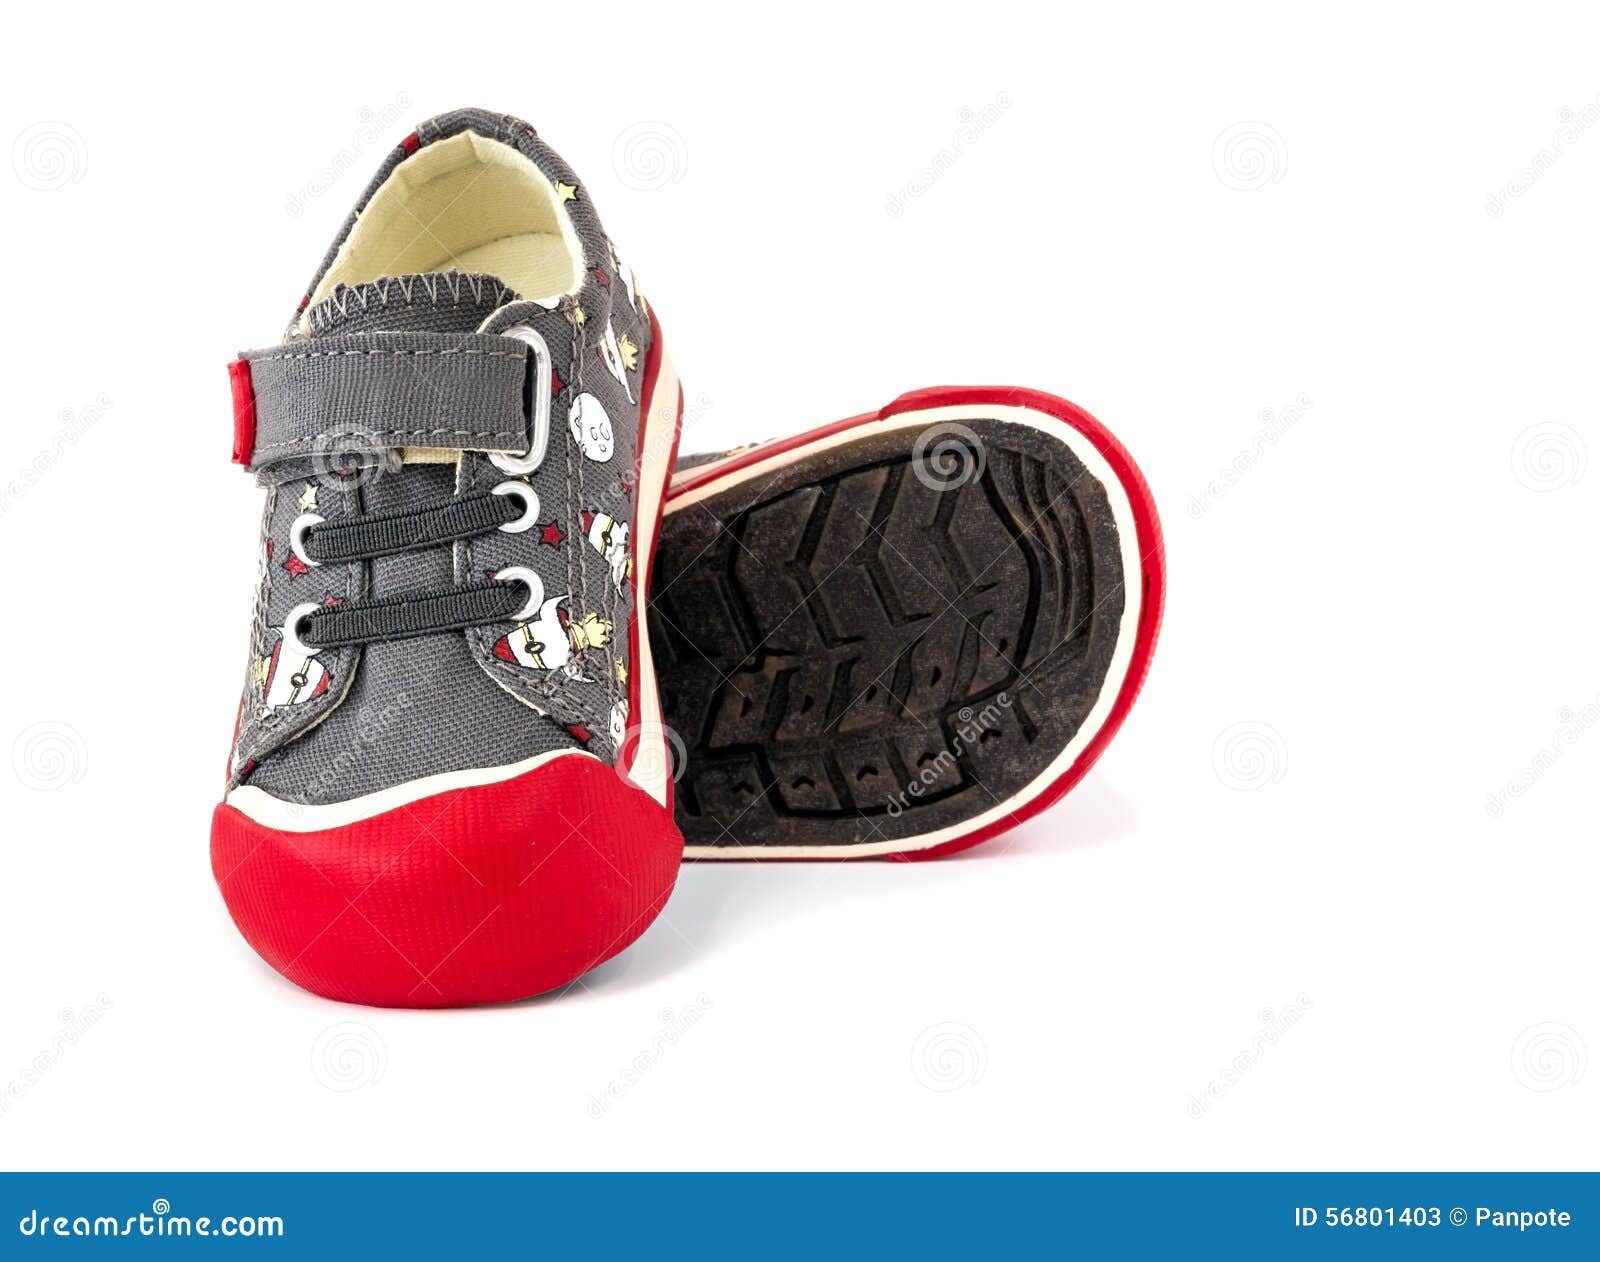 Kid s sneaker shoe stock image. Image of footwear, shoelace - 56801403